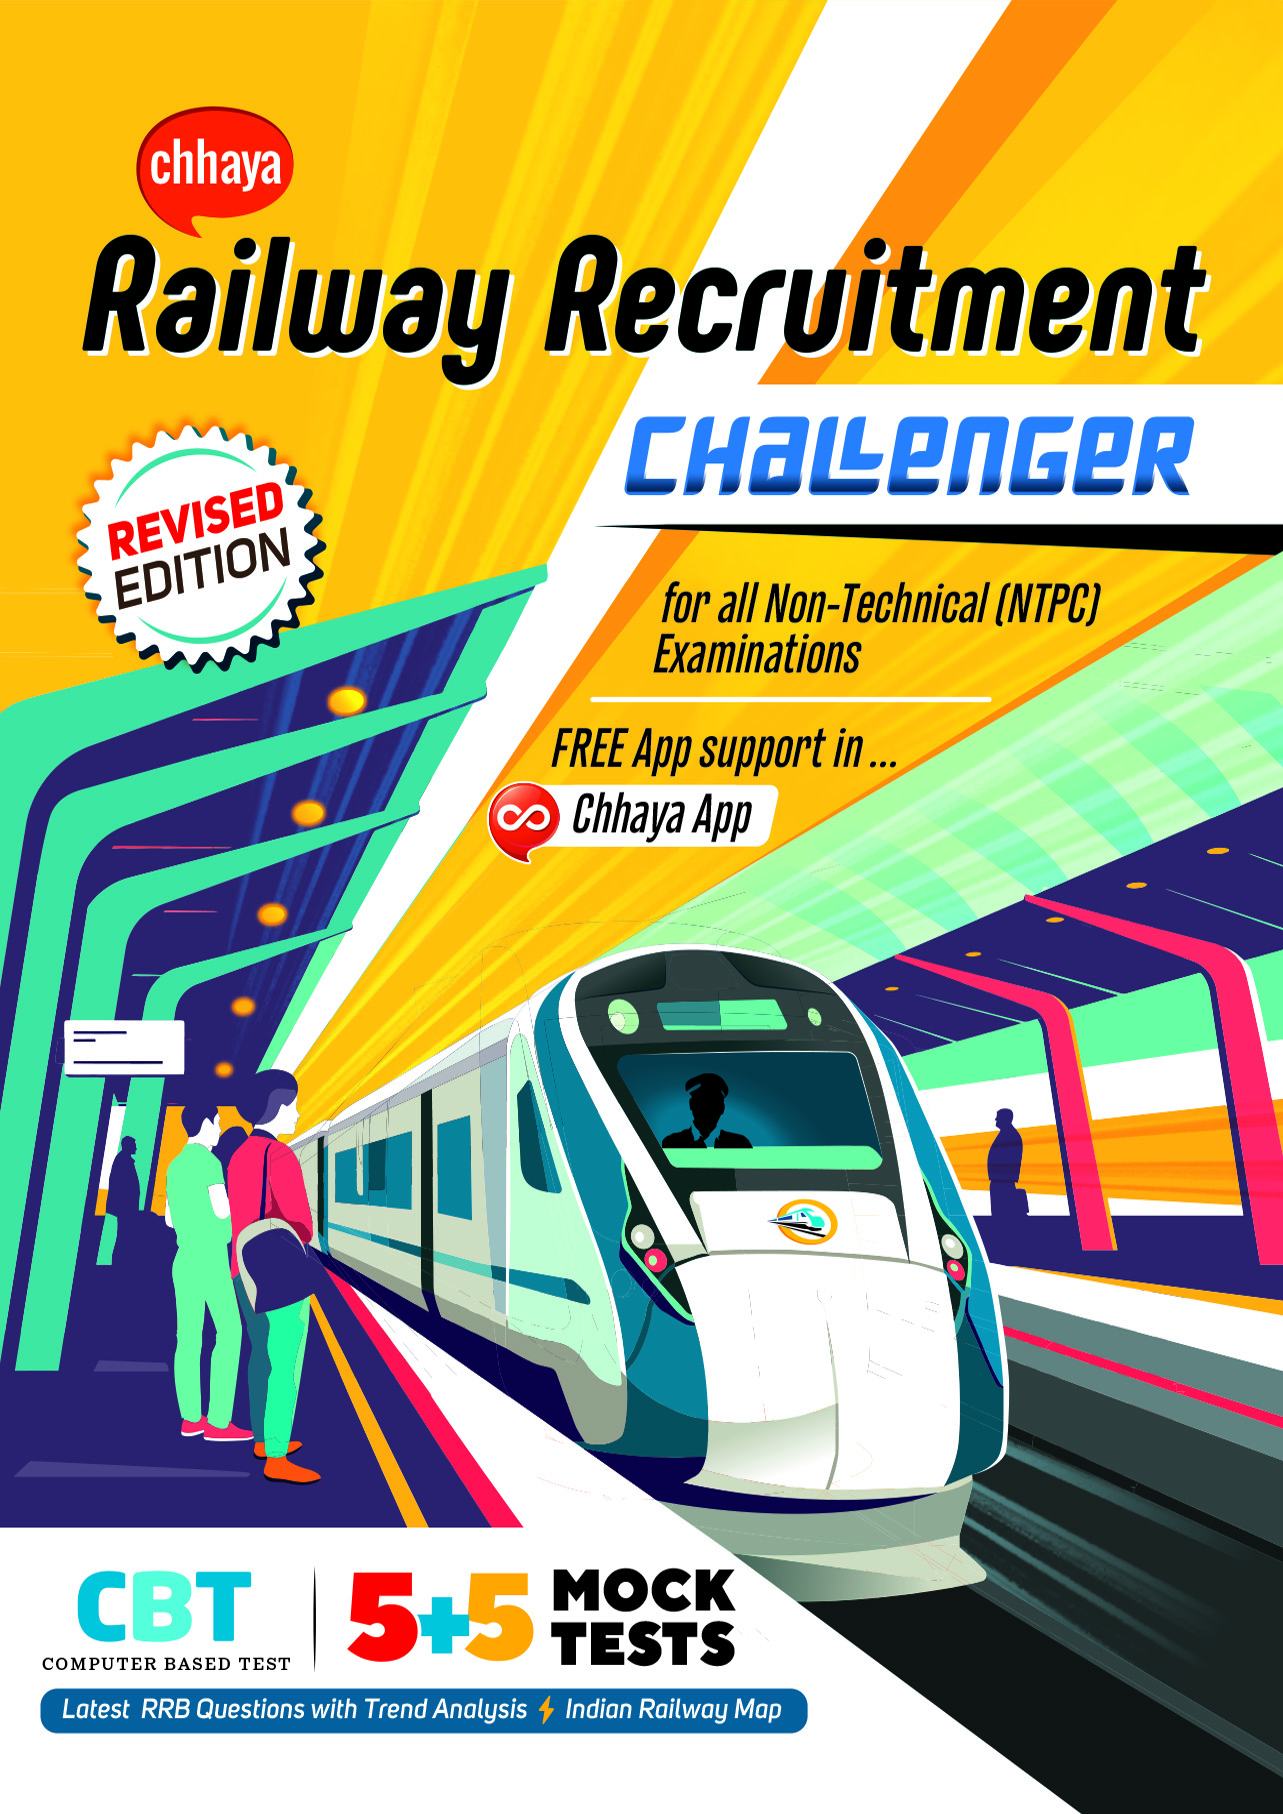 Railway Recruitment Challenger